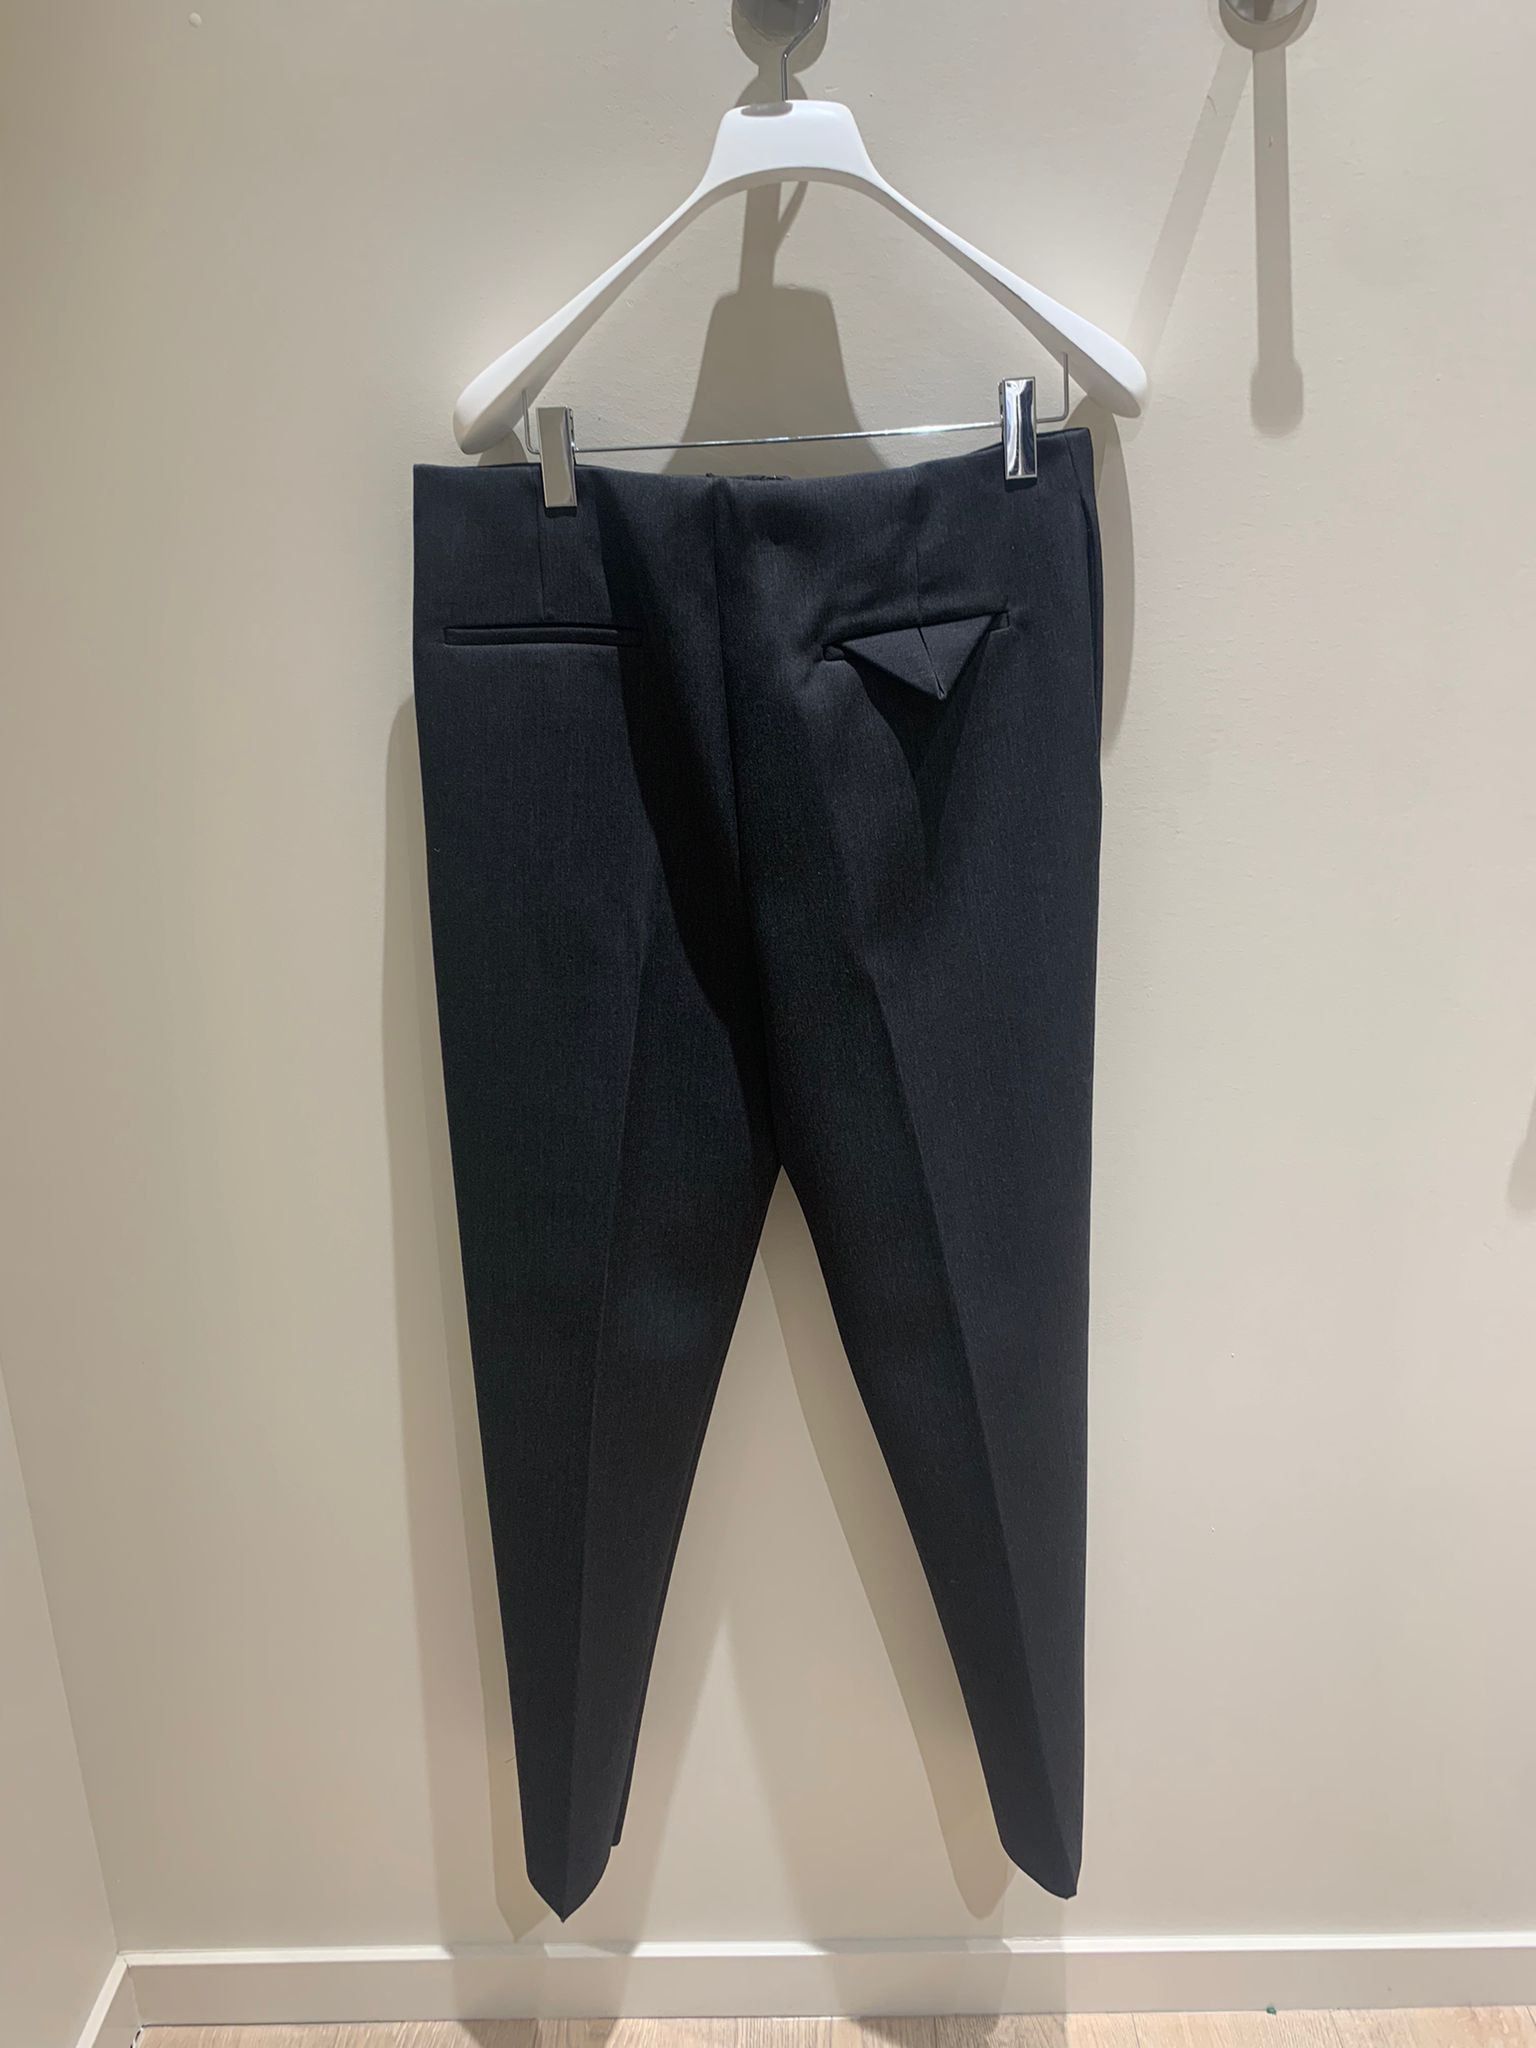 Bottega Veneta Double Compact Wool Pants in Black | Grailed